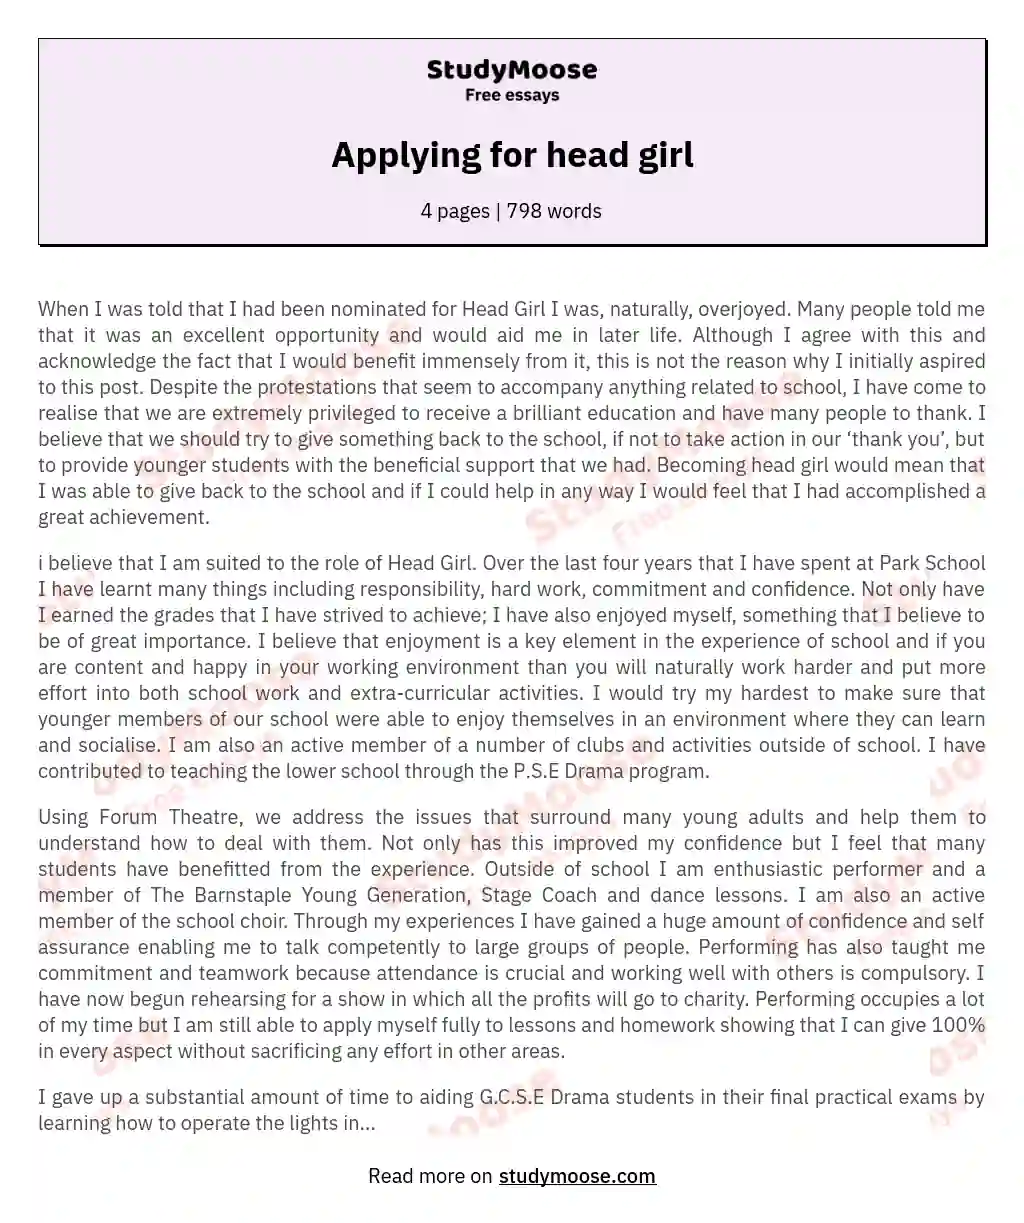 Applying for head girl essay